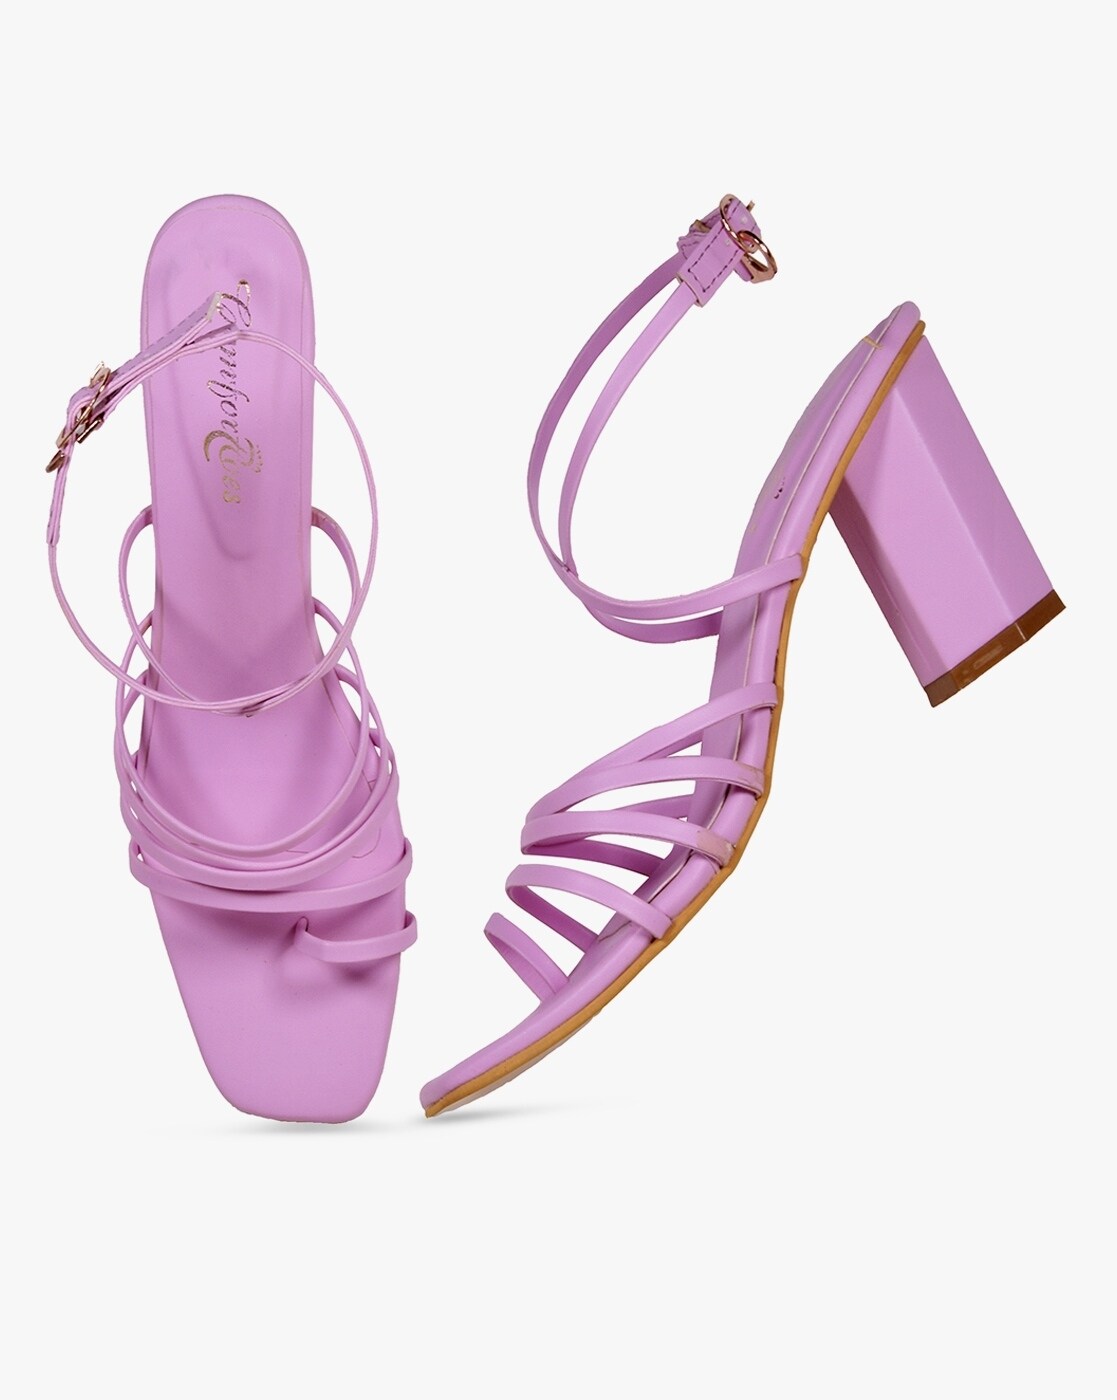 Heels Lilac Suede Shoes Women 'S sandals slippers high heels women Summer  elegant fashion party wedding